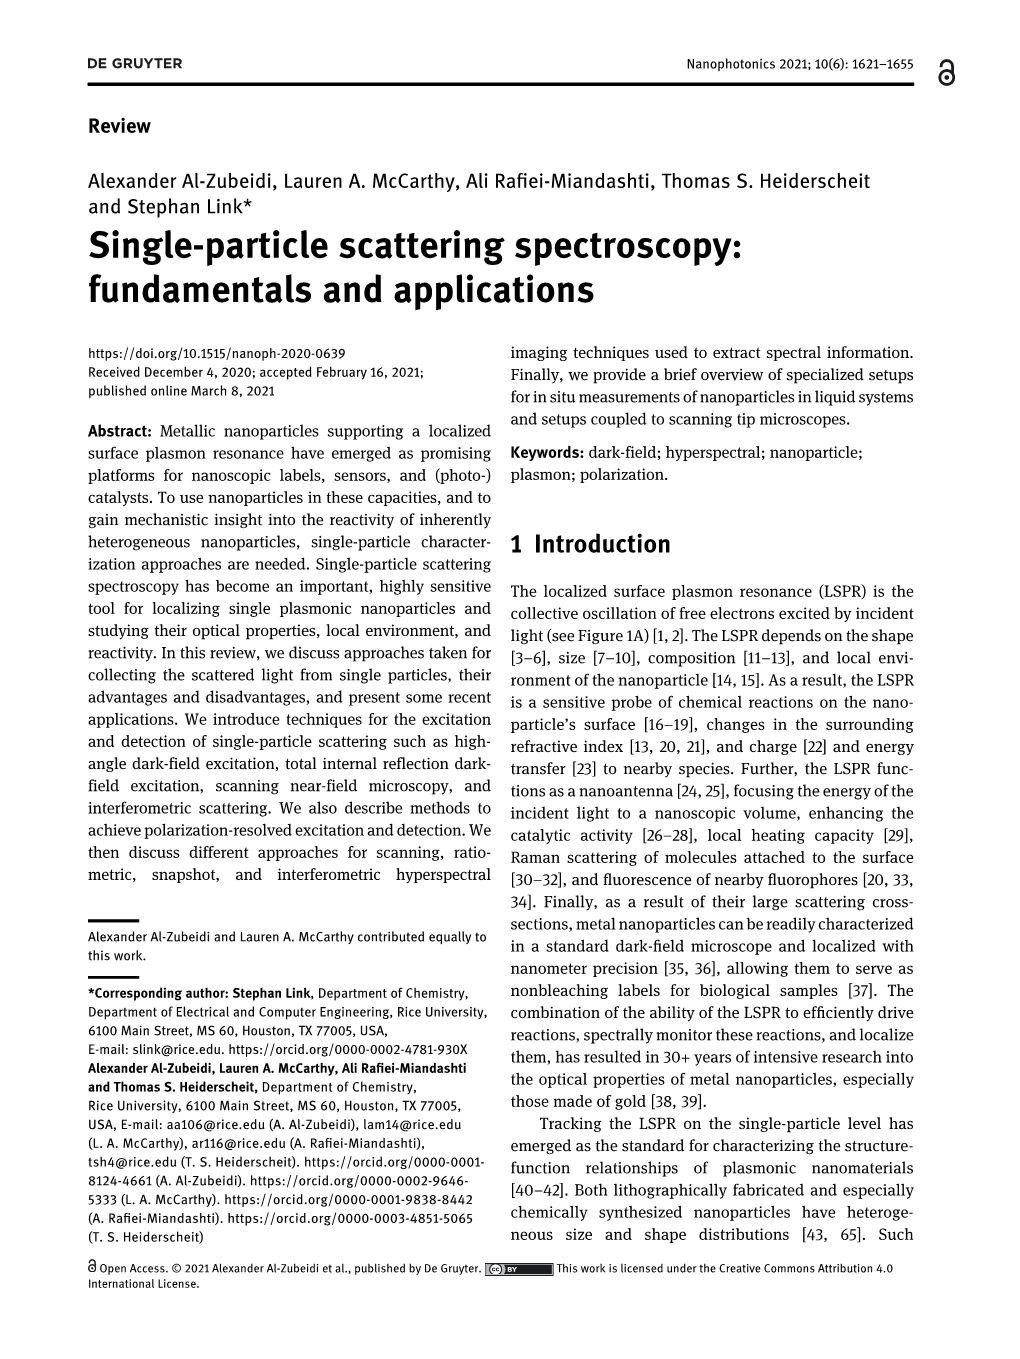 Single-Particle Scattering Spectroscopy